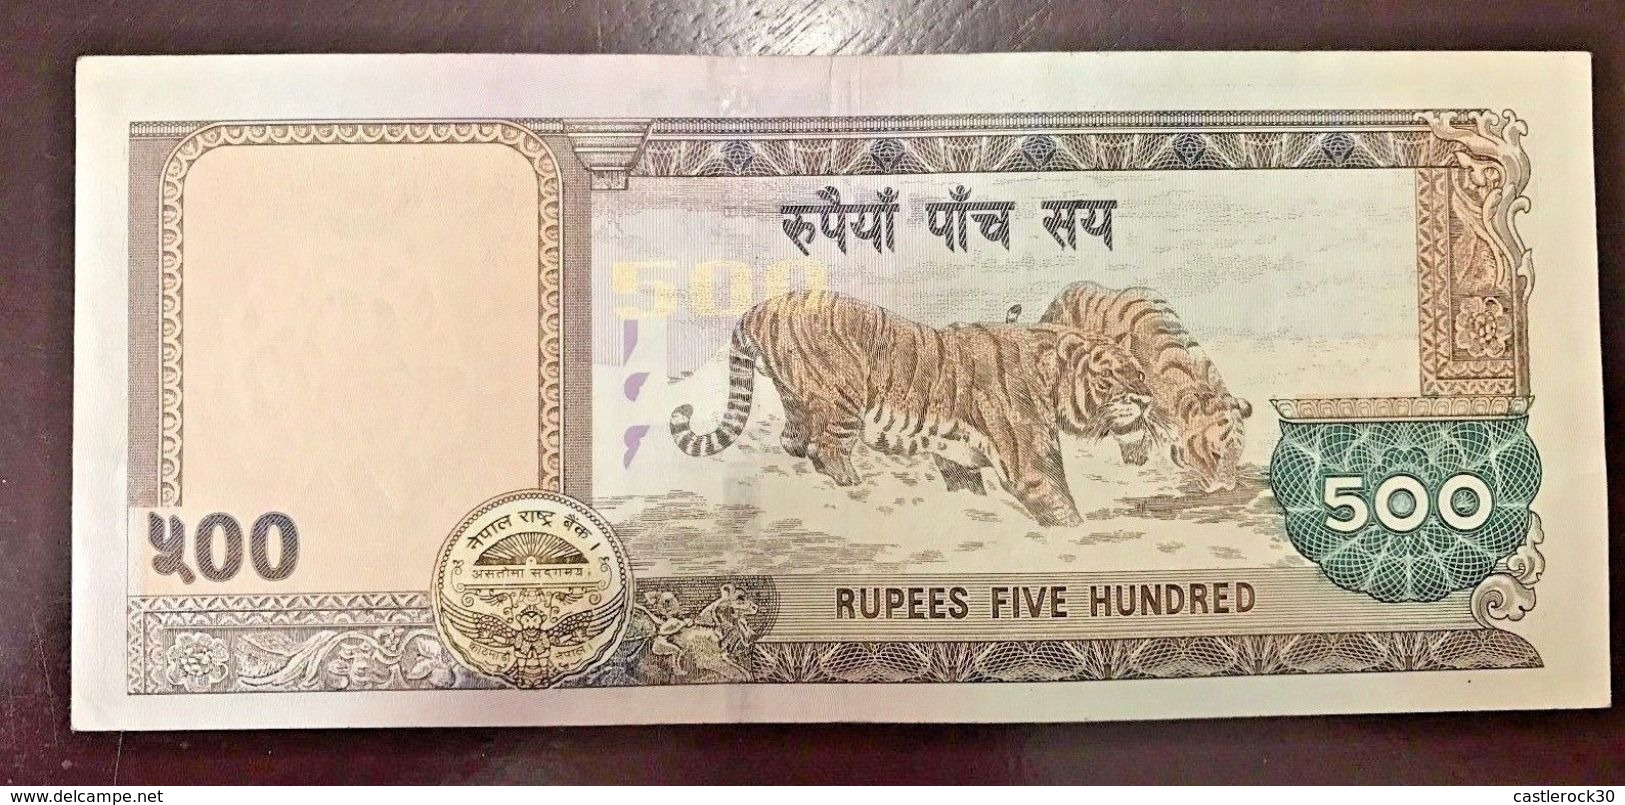 C) NEPAL BANK NOTE 500 RUPEES (2009) UNC - Nepal